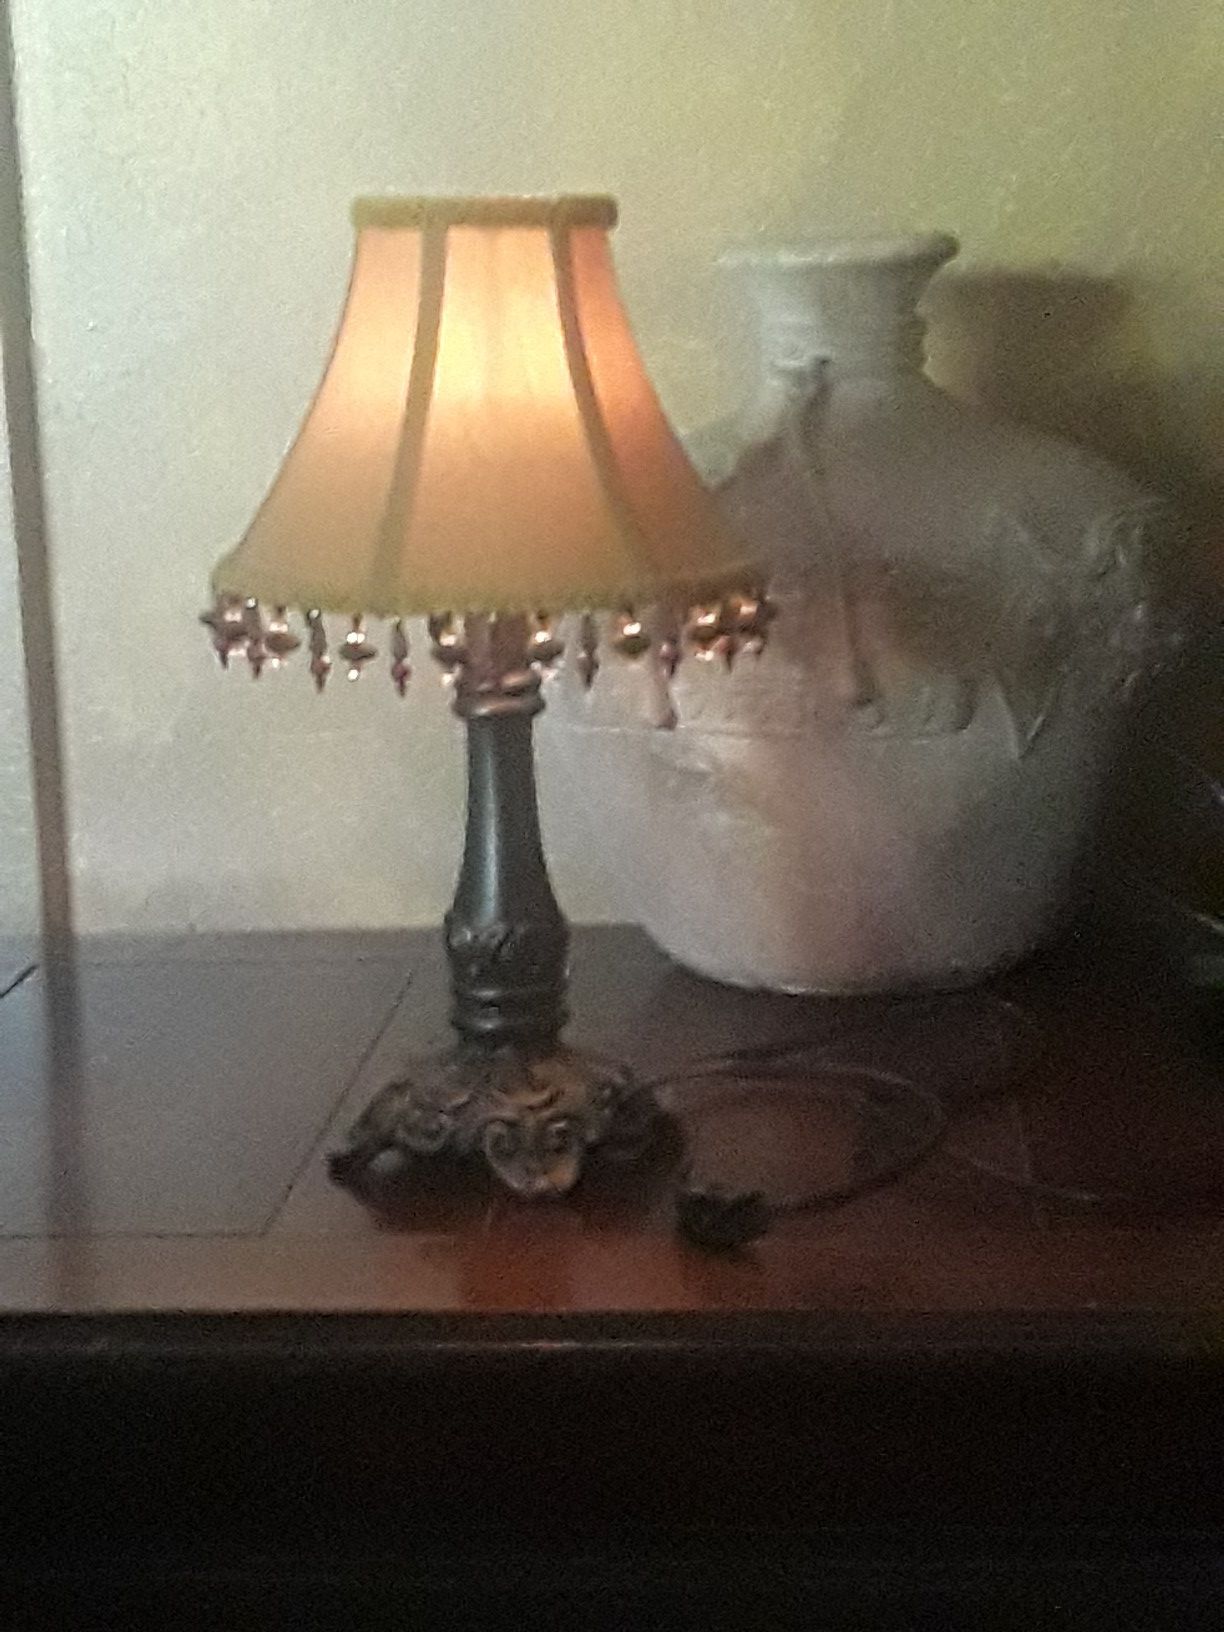 Small lamp.